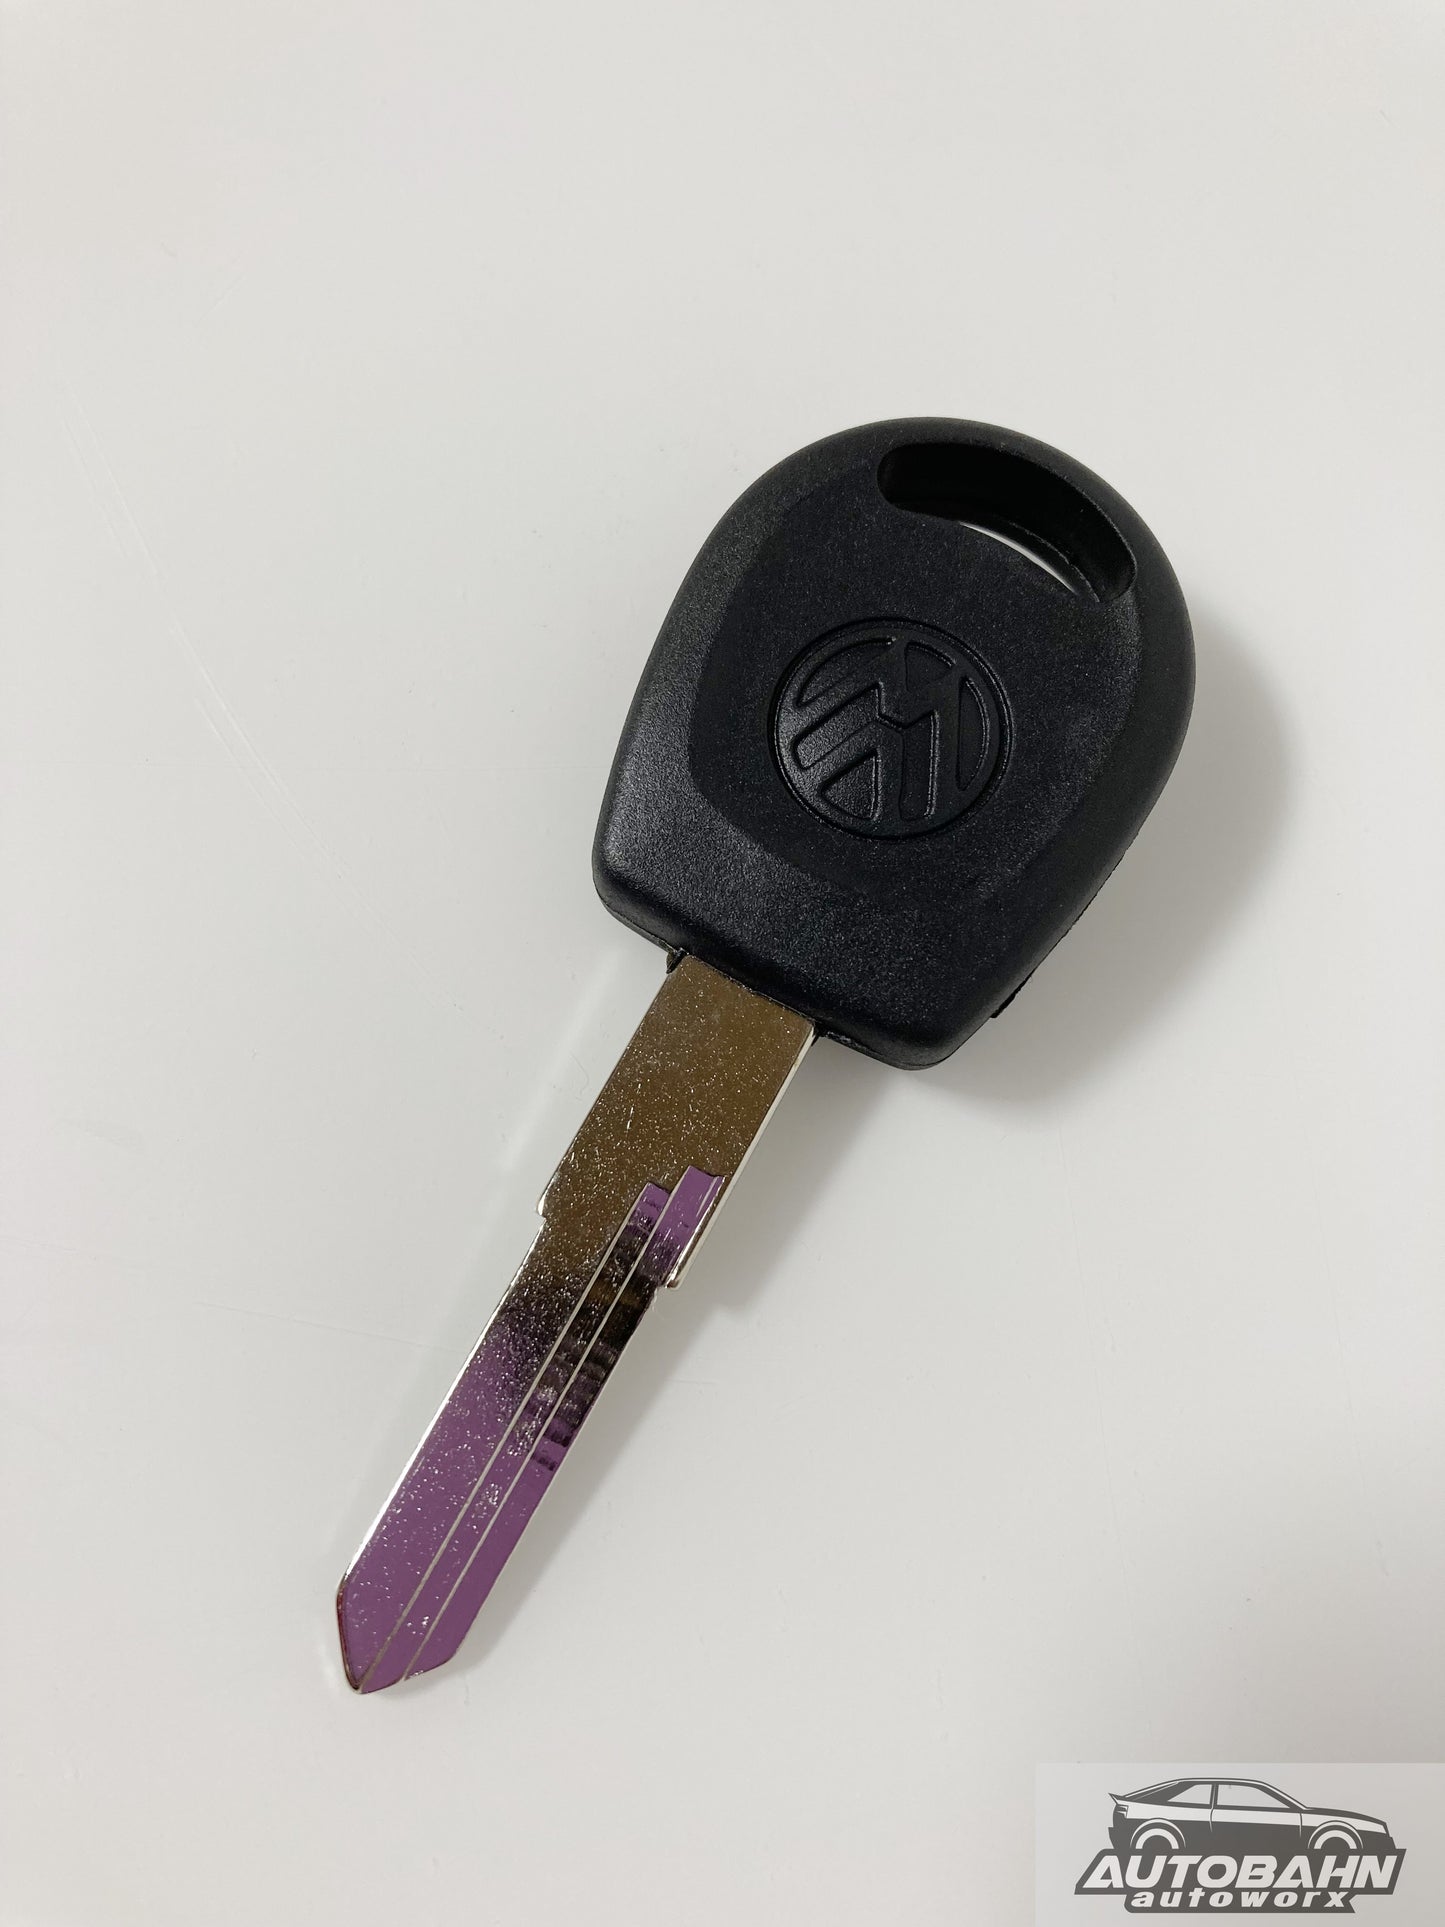 VW Mk3 Golf Jetta Eurovan AH key blank with chip holder